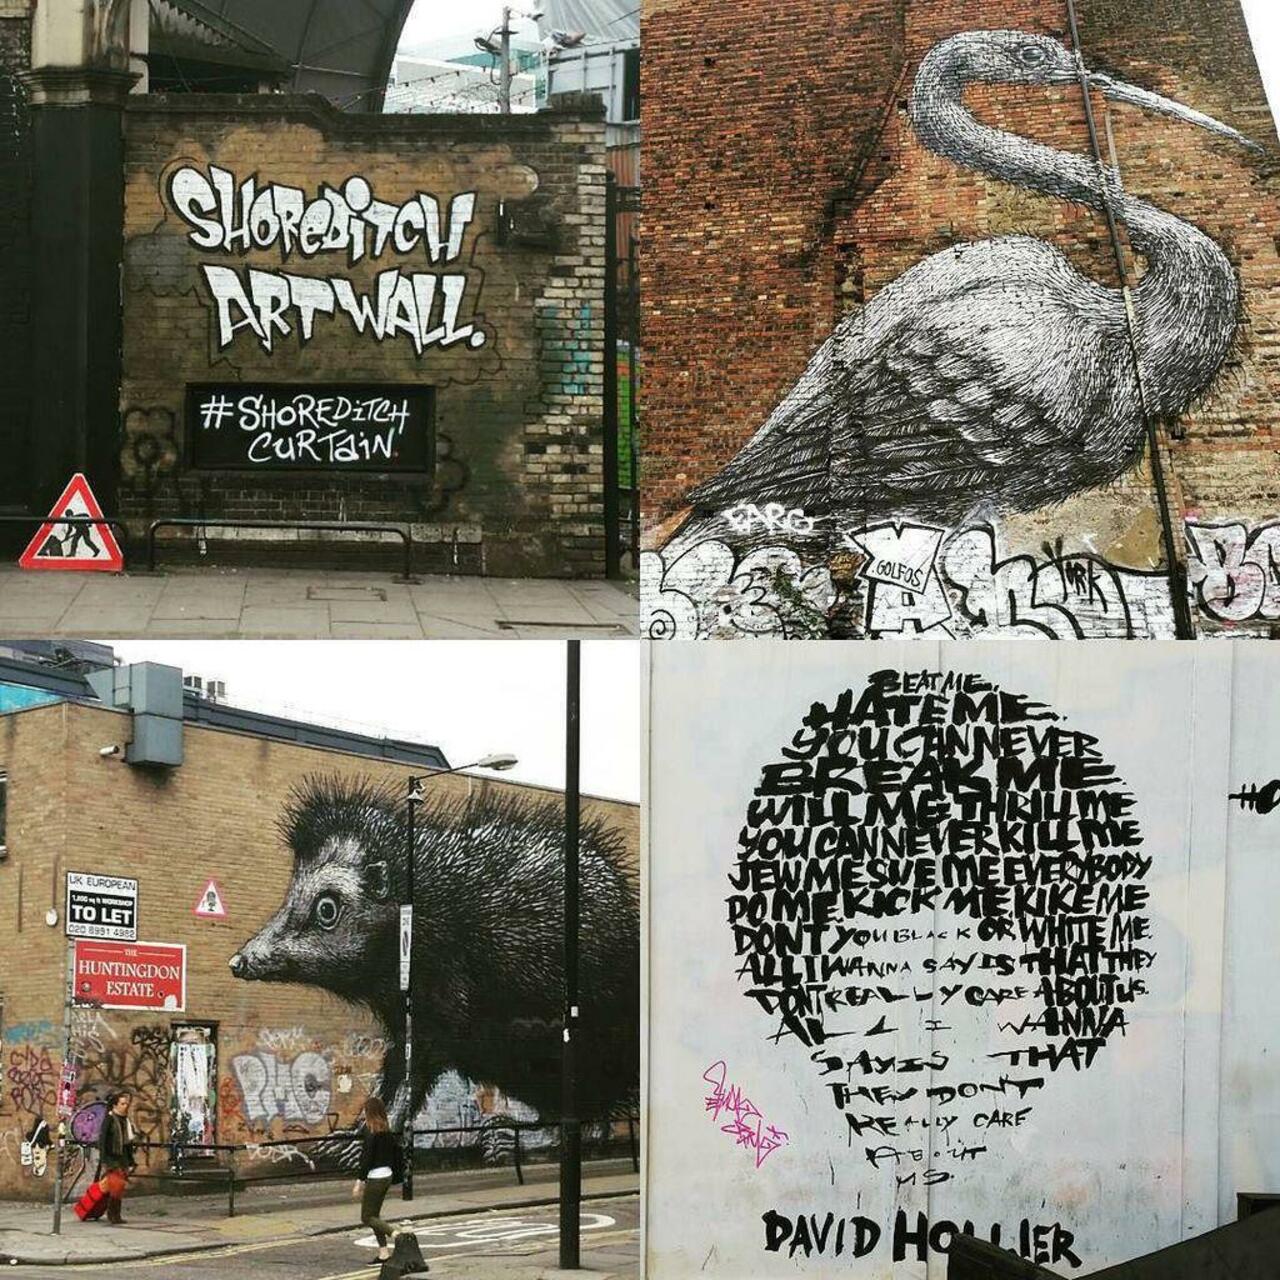 #alternativelondon #shoreditch #london #streetart #streetartlondon #graffiti #eastlondon by emmaday.nl http://t.co/Ribd6tPqGF